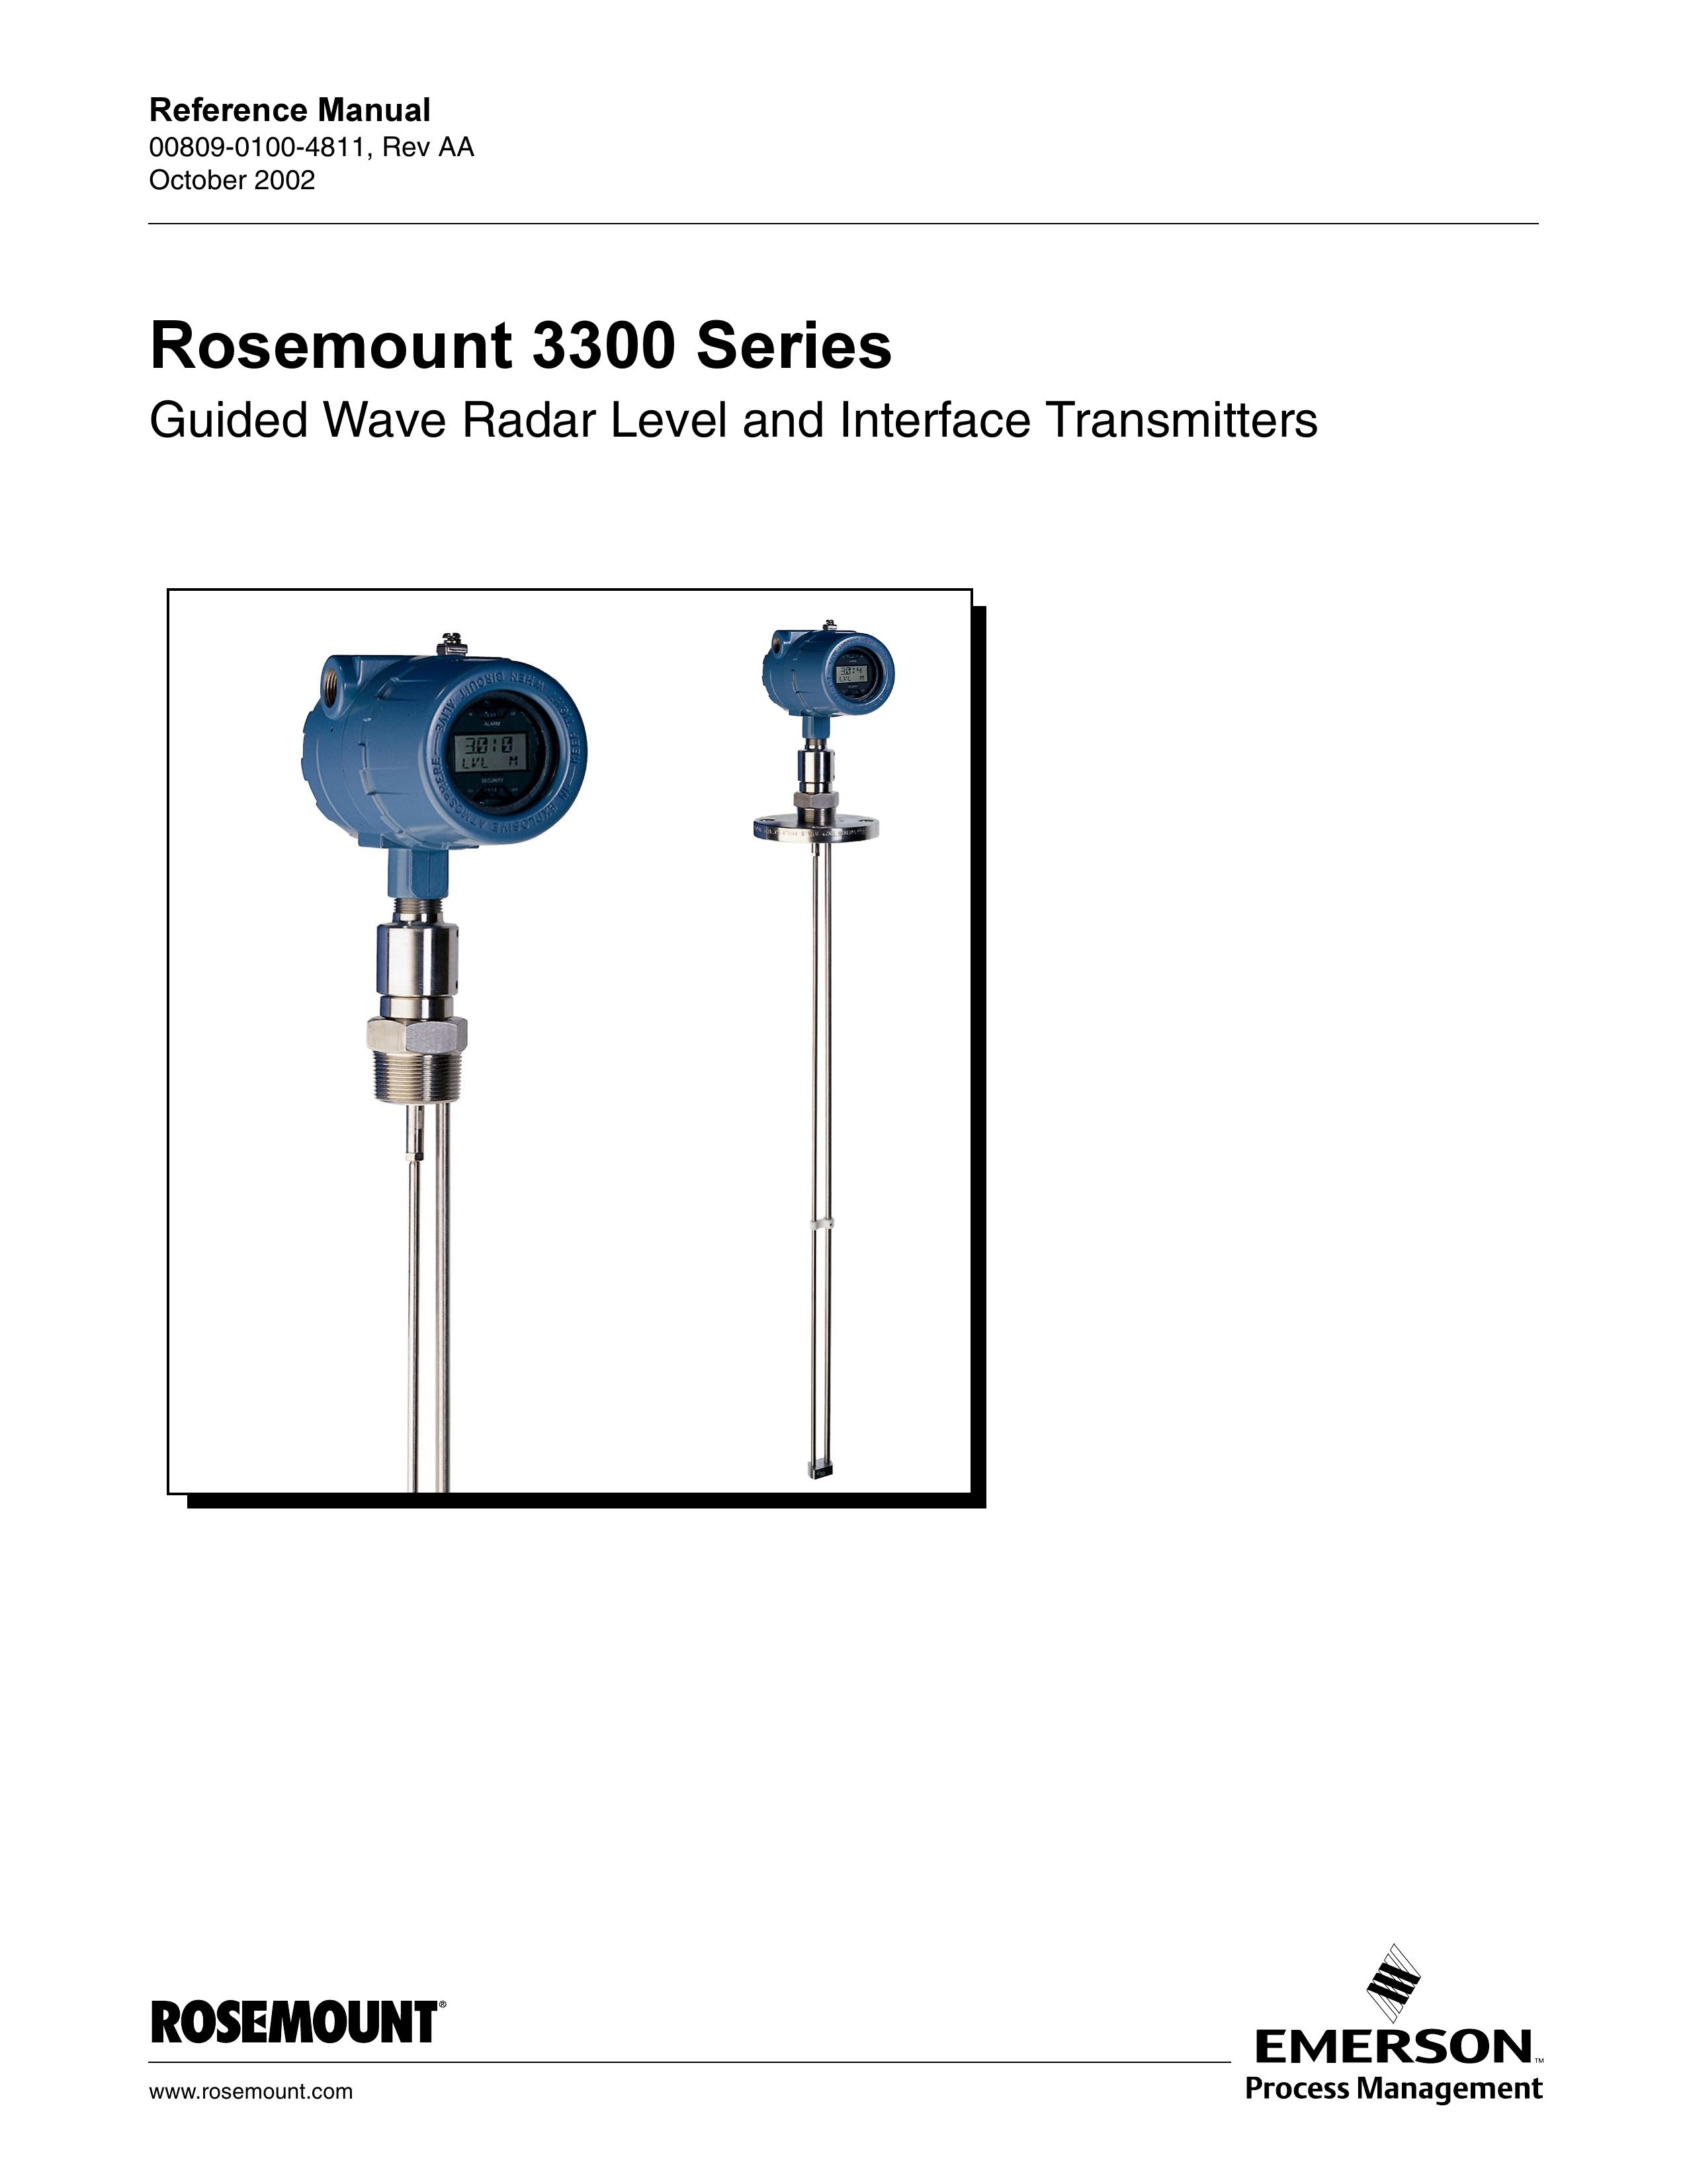 Emerson Process Management rosemount 3300 series Marine RADAR User Manual